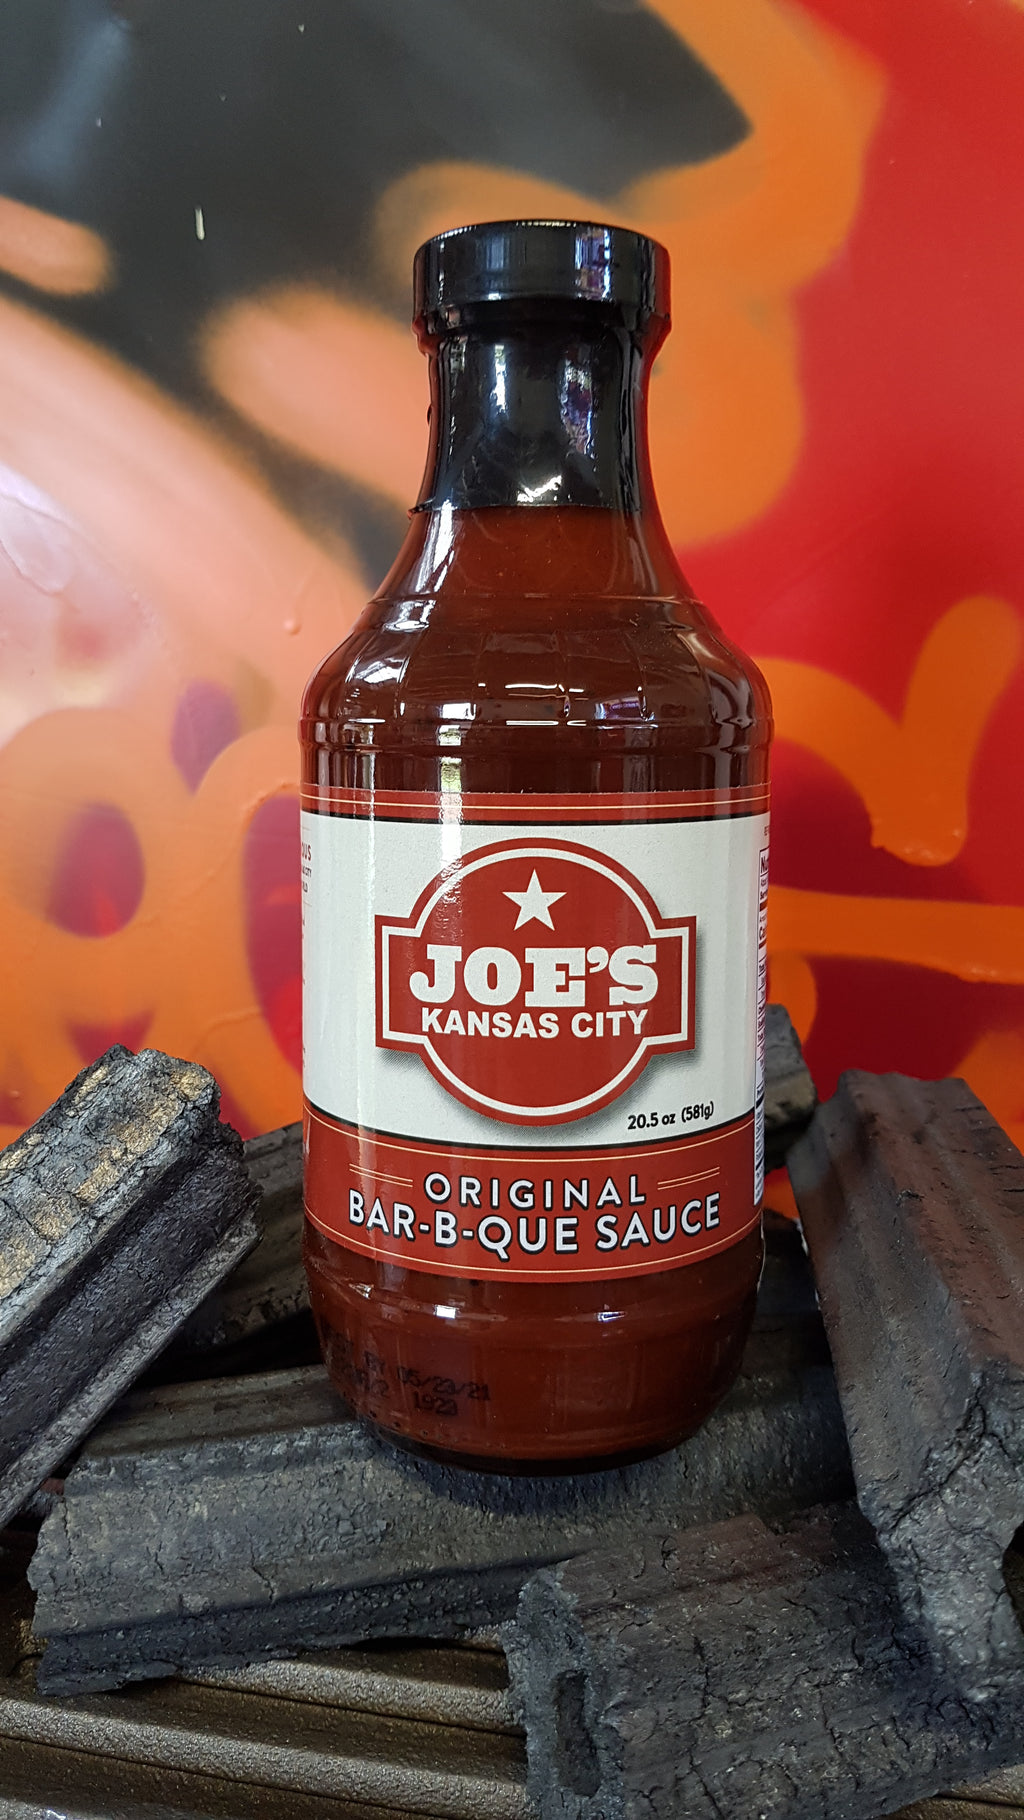 Original Bar-B-Que Sauce 581g by Joe's Kansas City